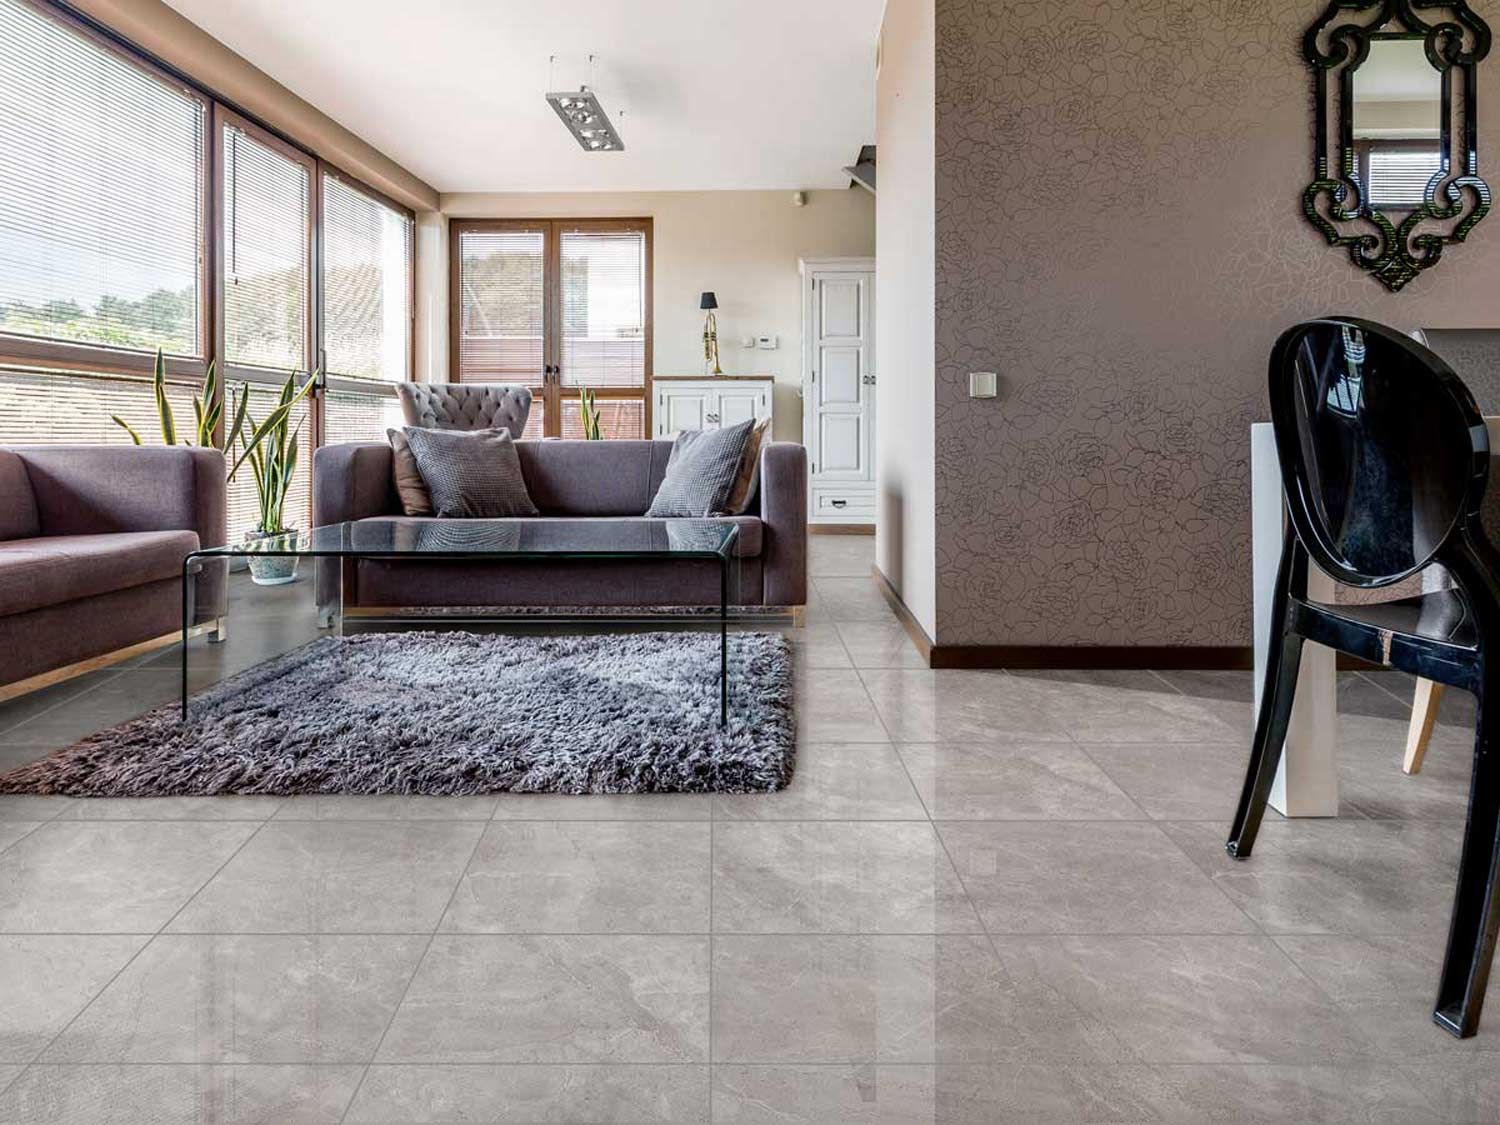 Palala Grey Shiny Ceramic Floor Tile, Are Ceramic Tiles Ok For Floors